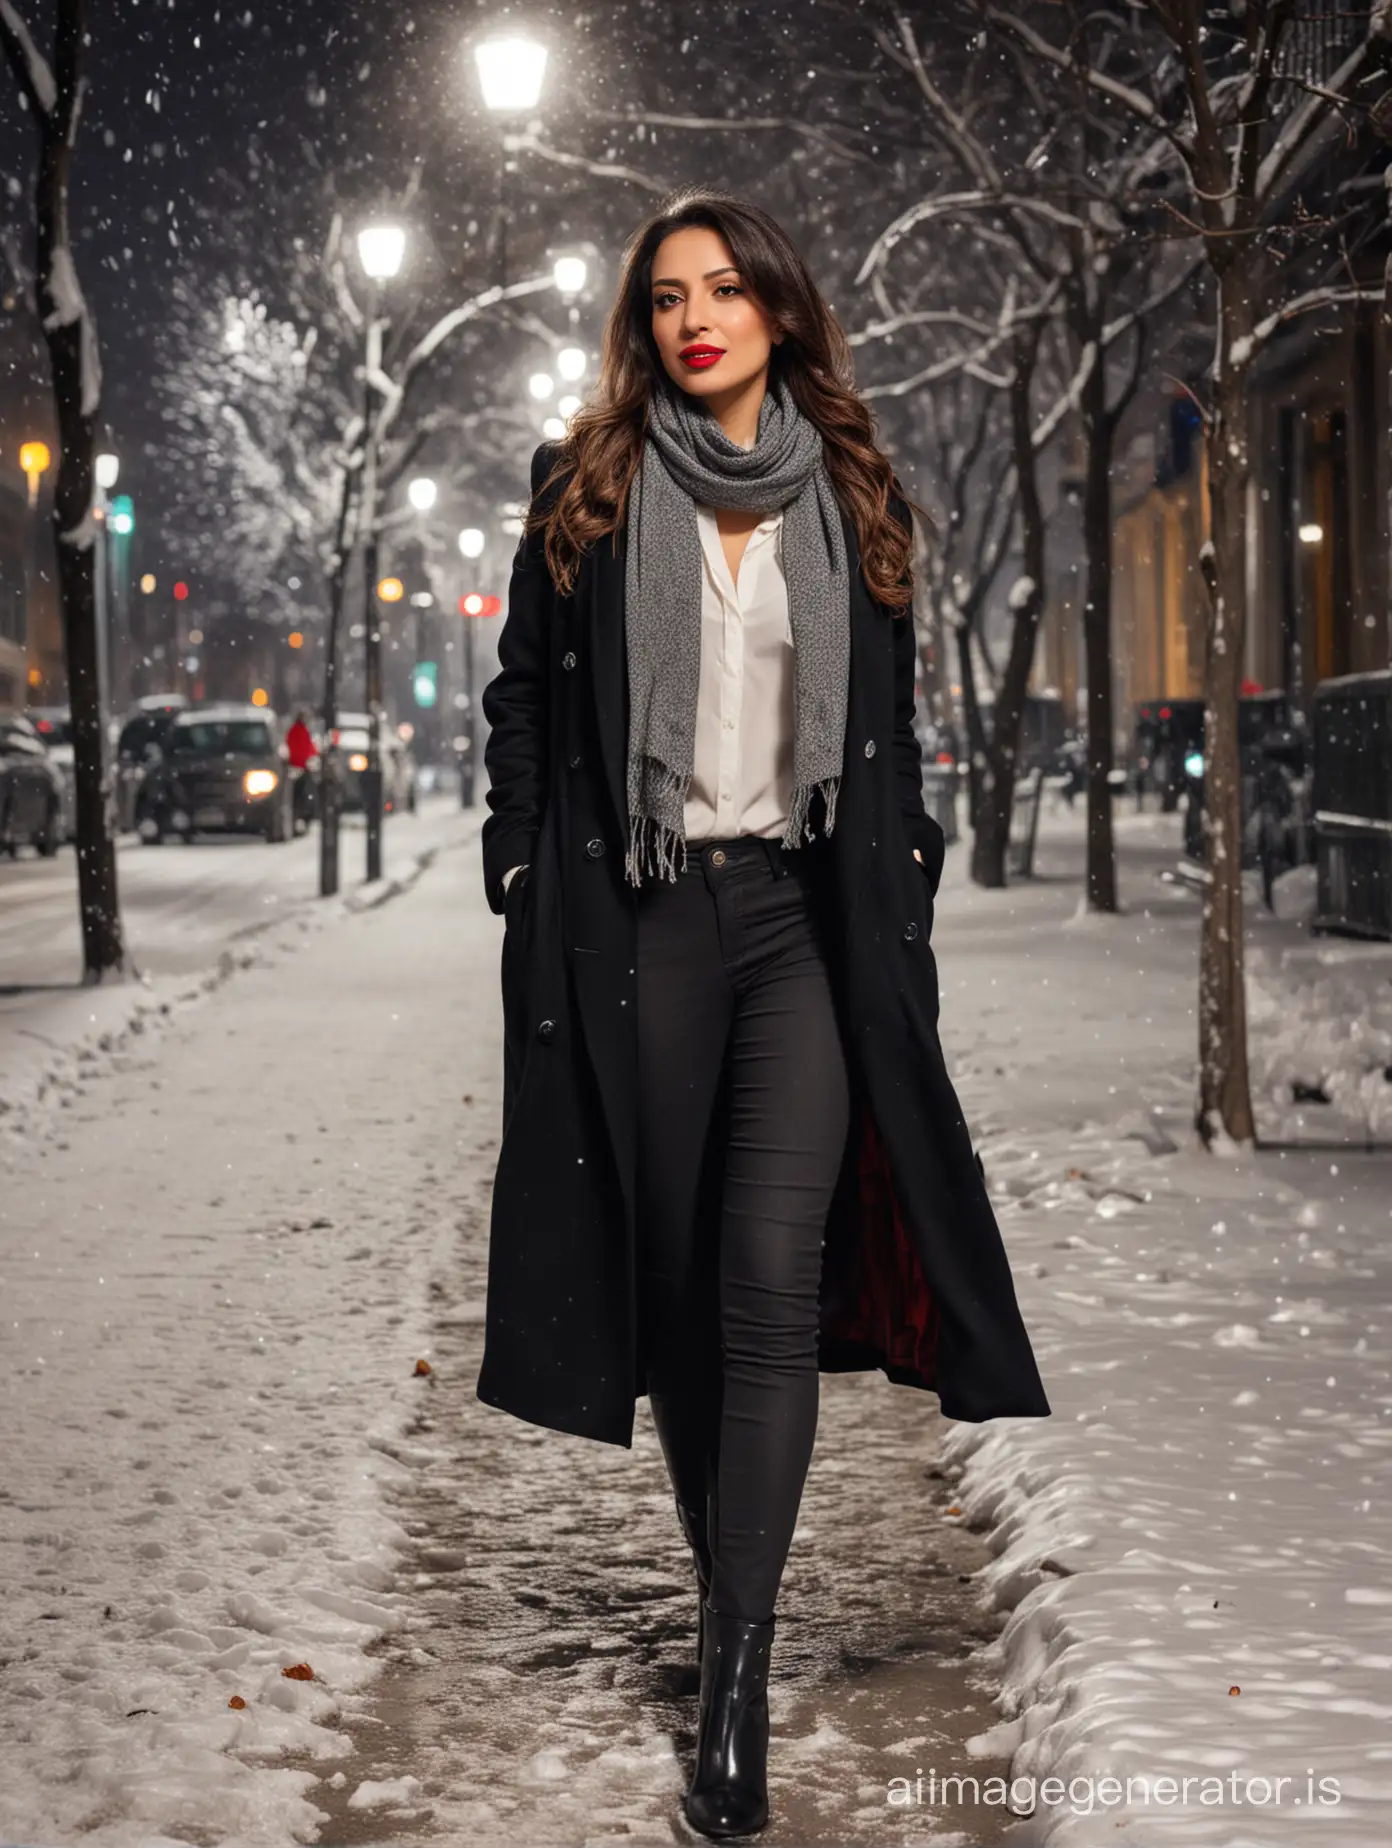 Stylish-Iranian-Woman-in-Snowy-Night-Street-with-Dramatic-Lighting